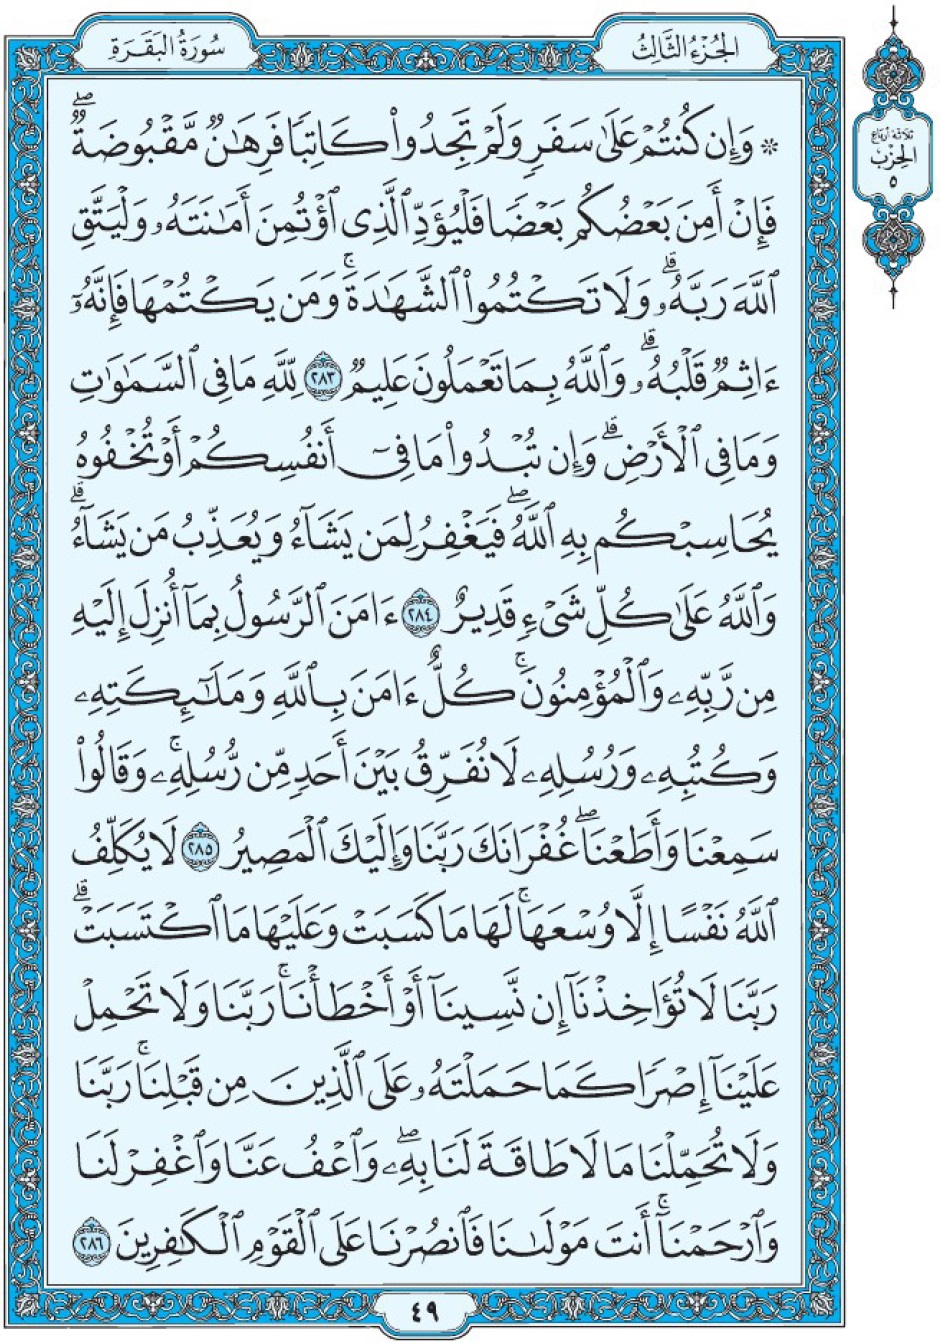 Коран Мединский мусхаф страница 49, Аль-Бакара, аят 283-286, Амана р-расуль